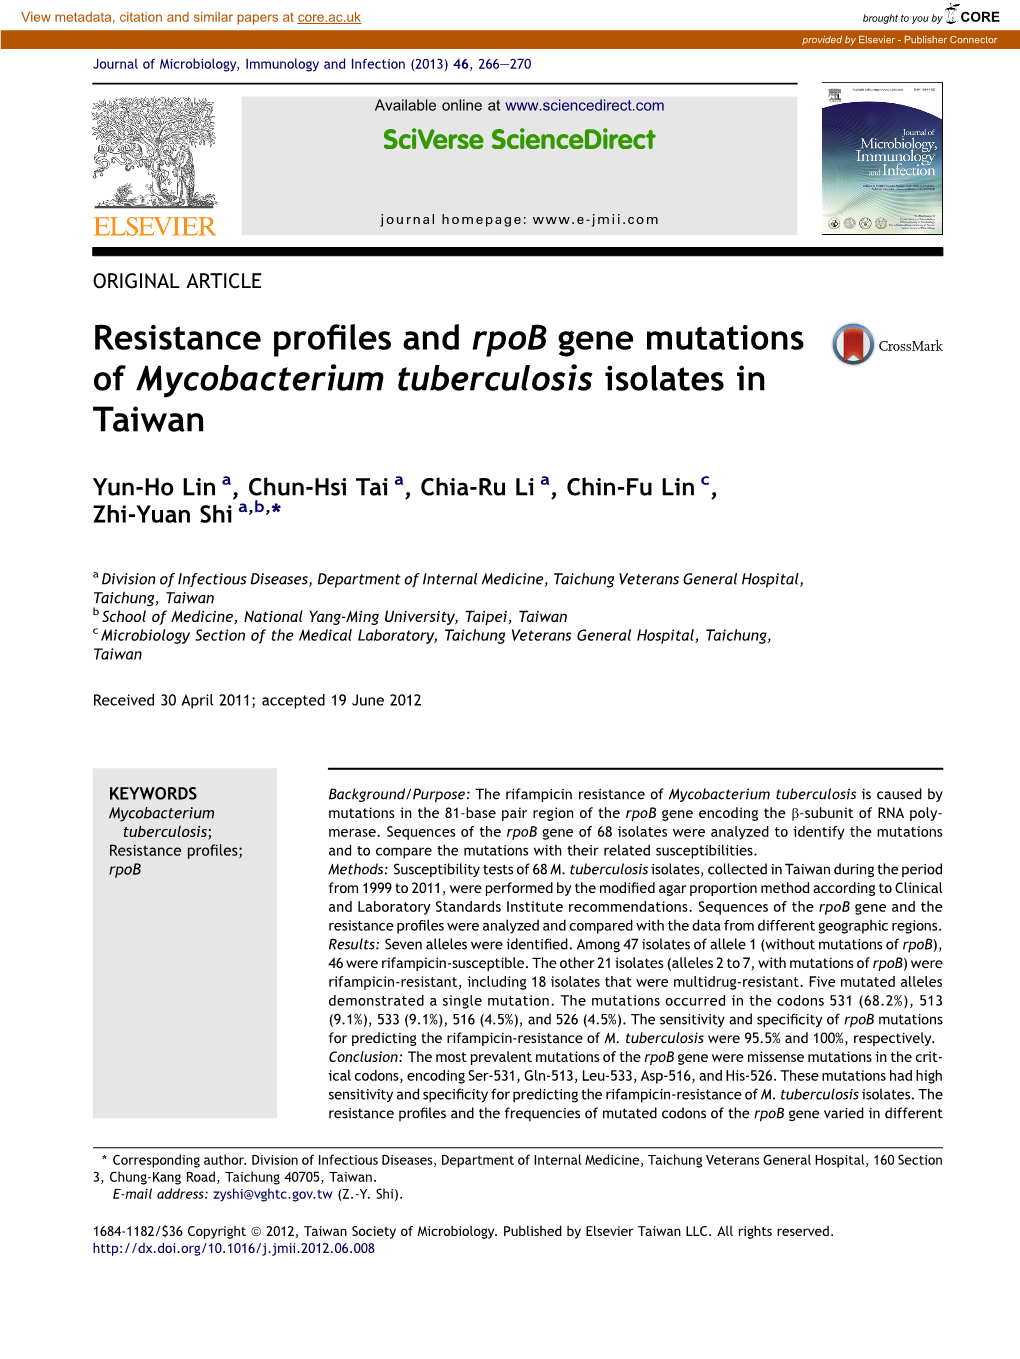 Resistance Profiles and Rpob Gene Mutations of Mycobacterium